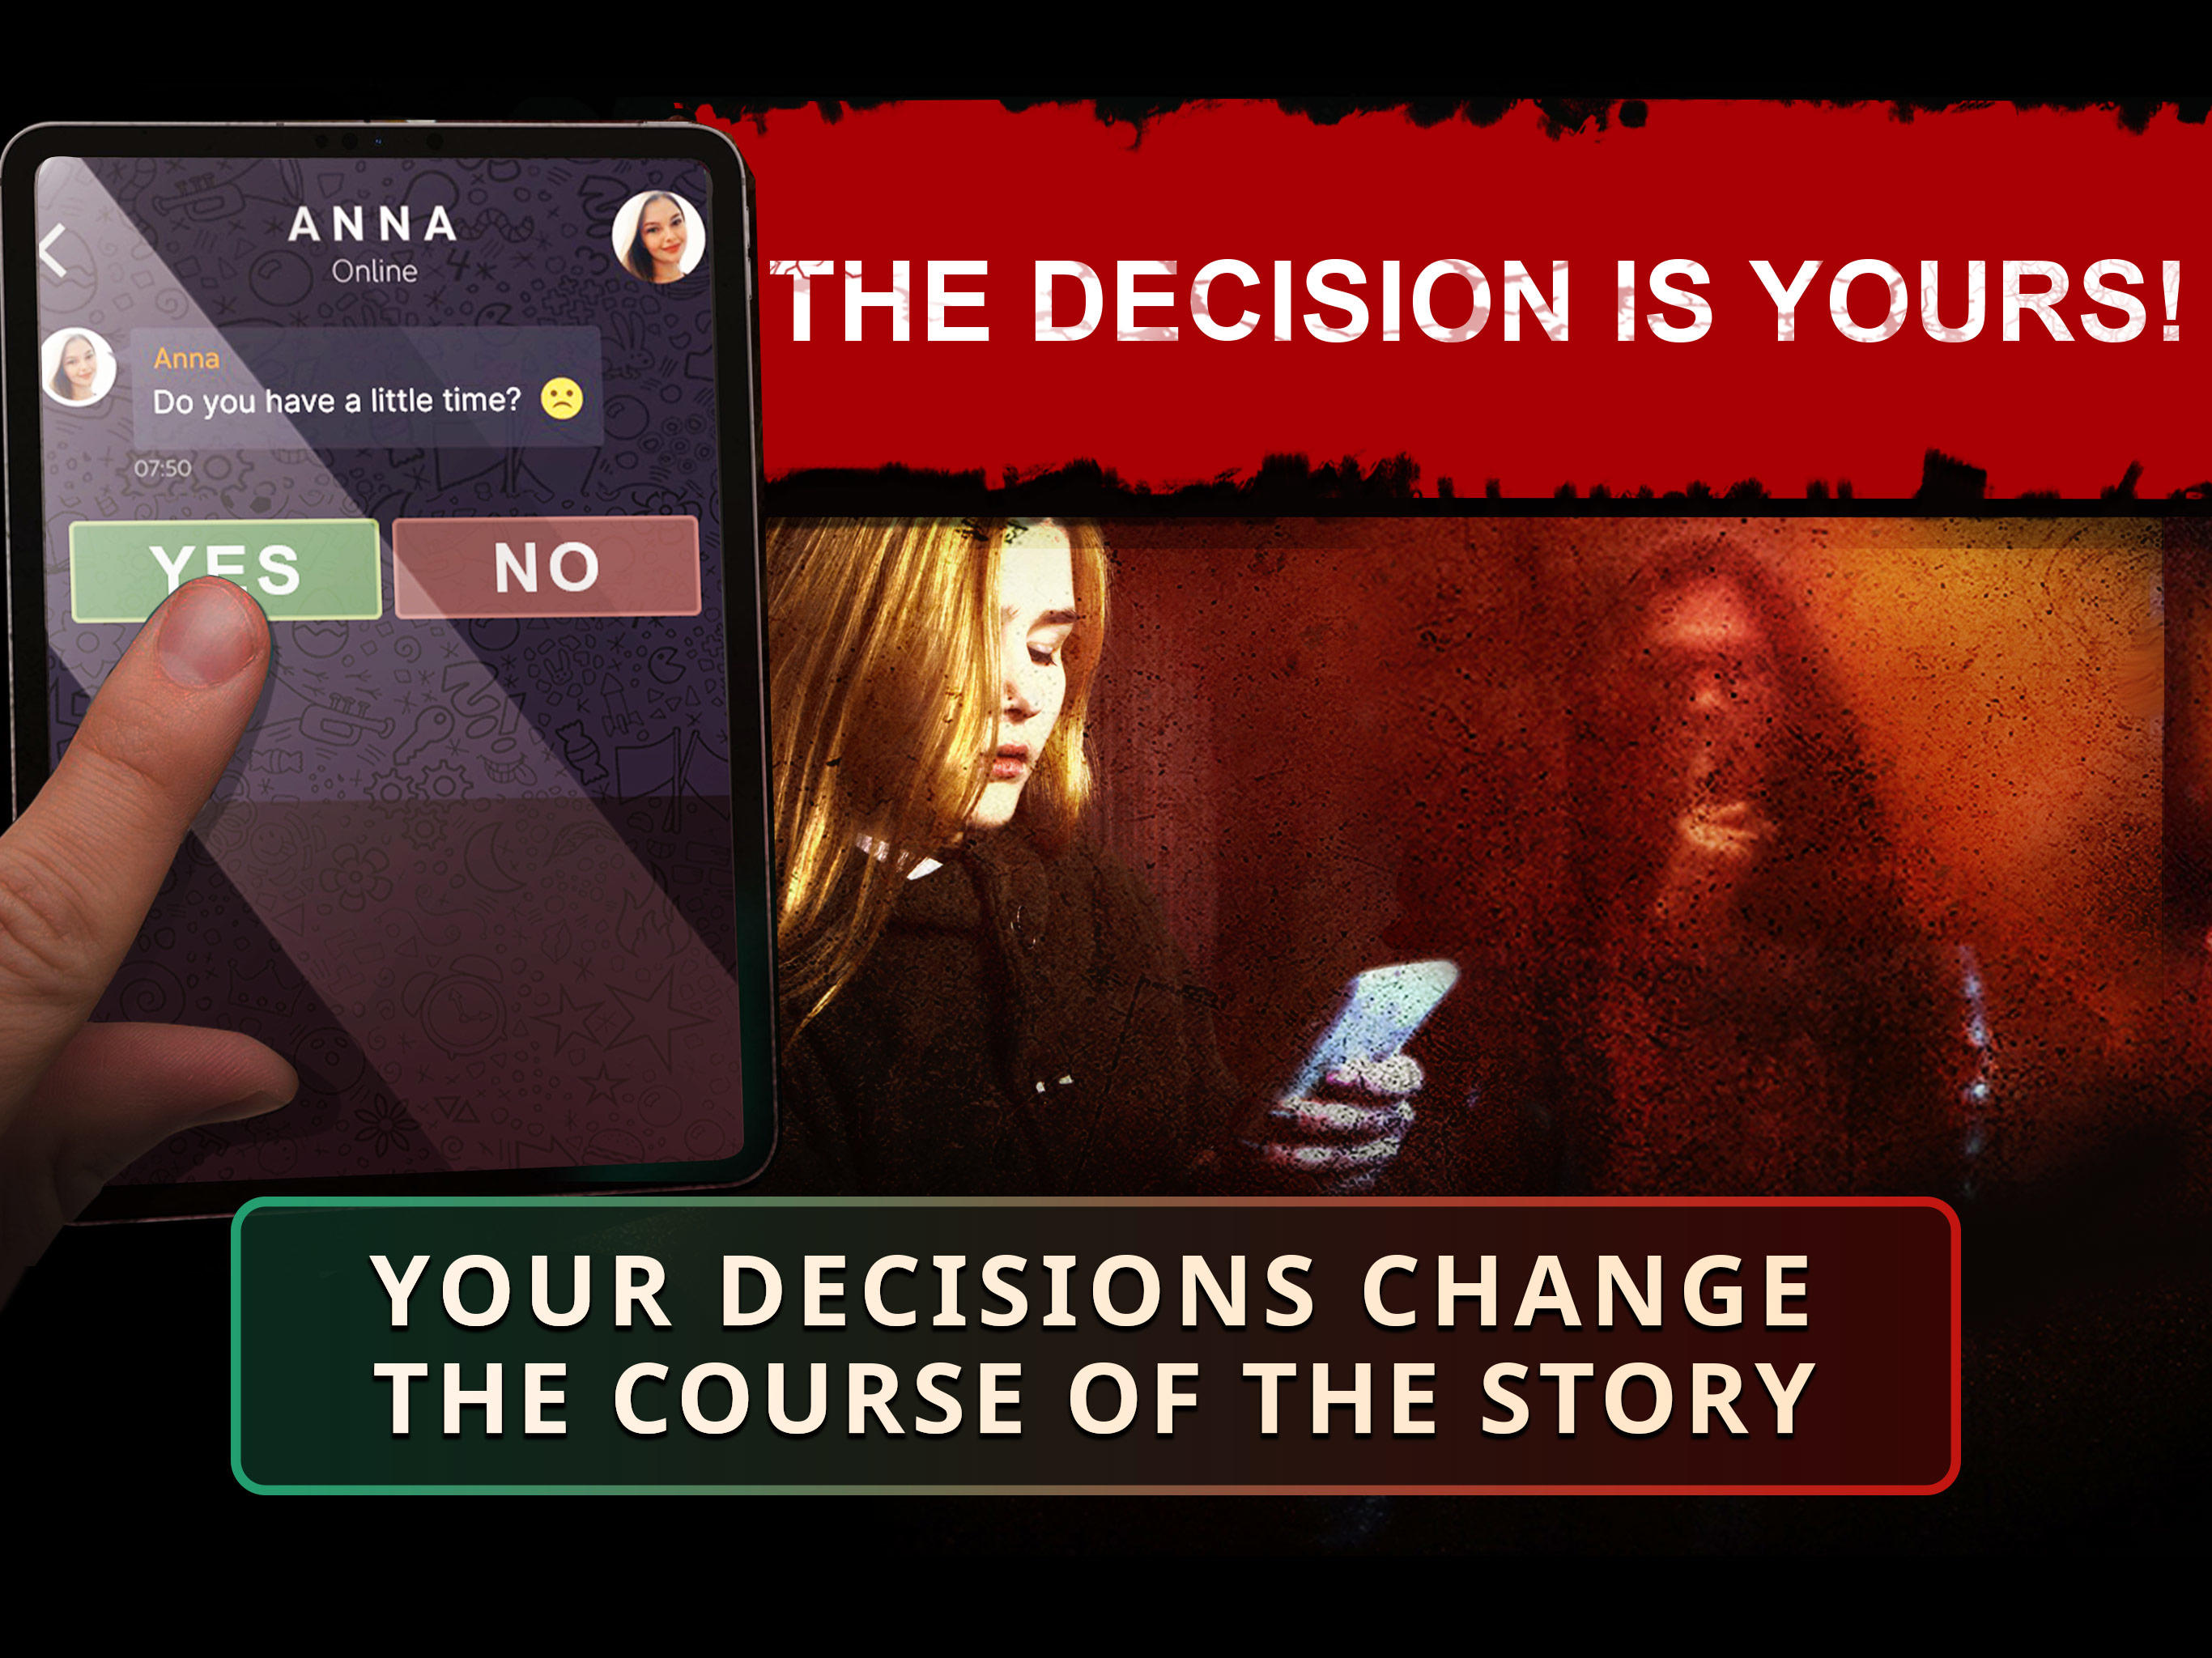 The Healing - Horror Story screenshot game